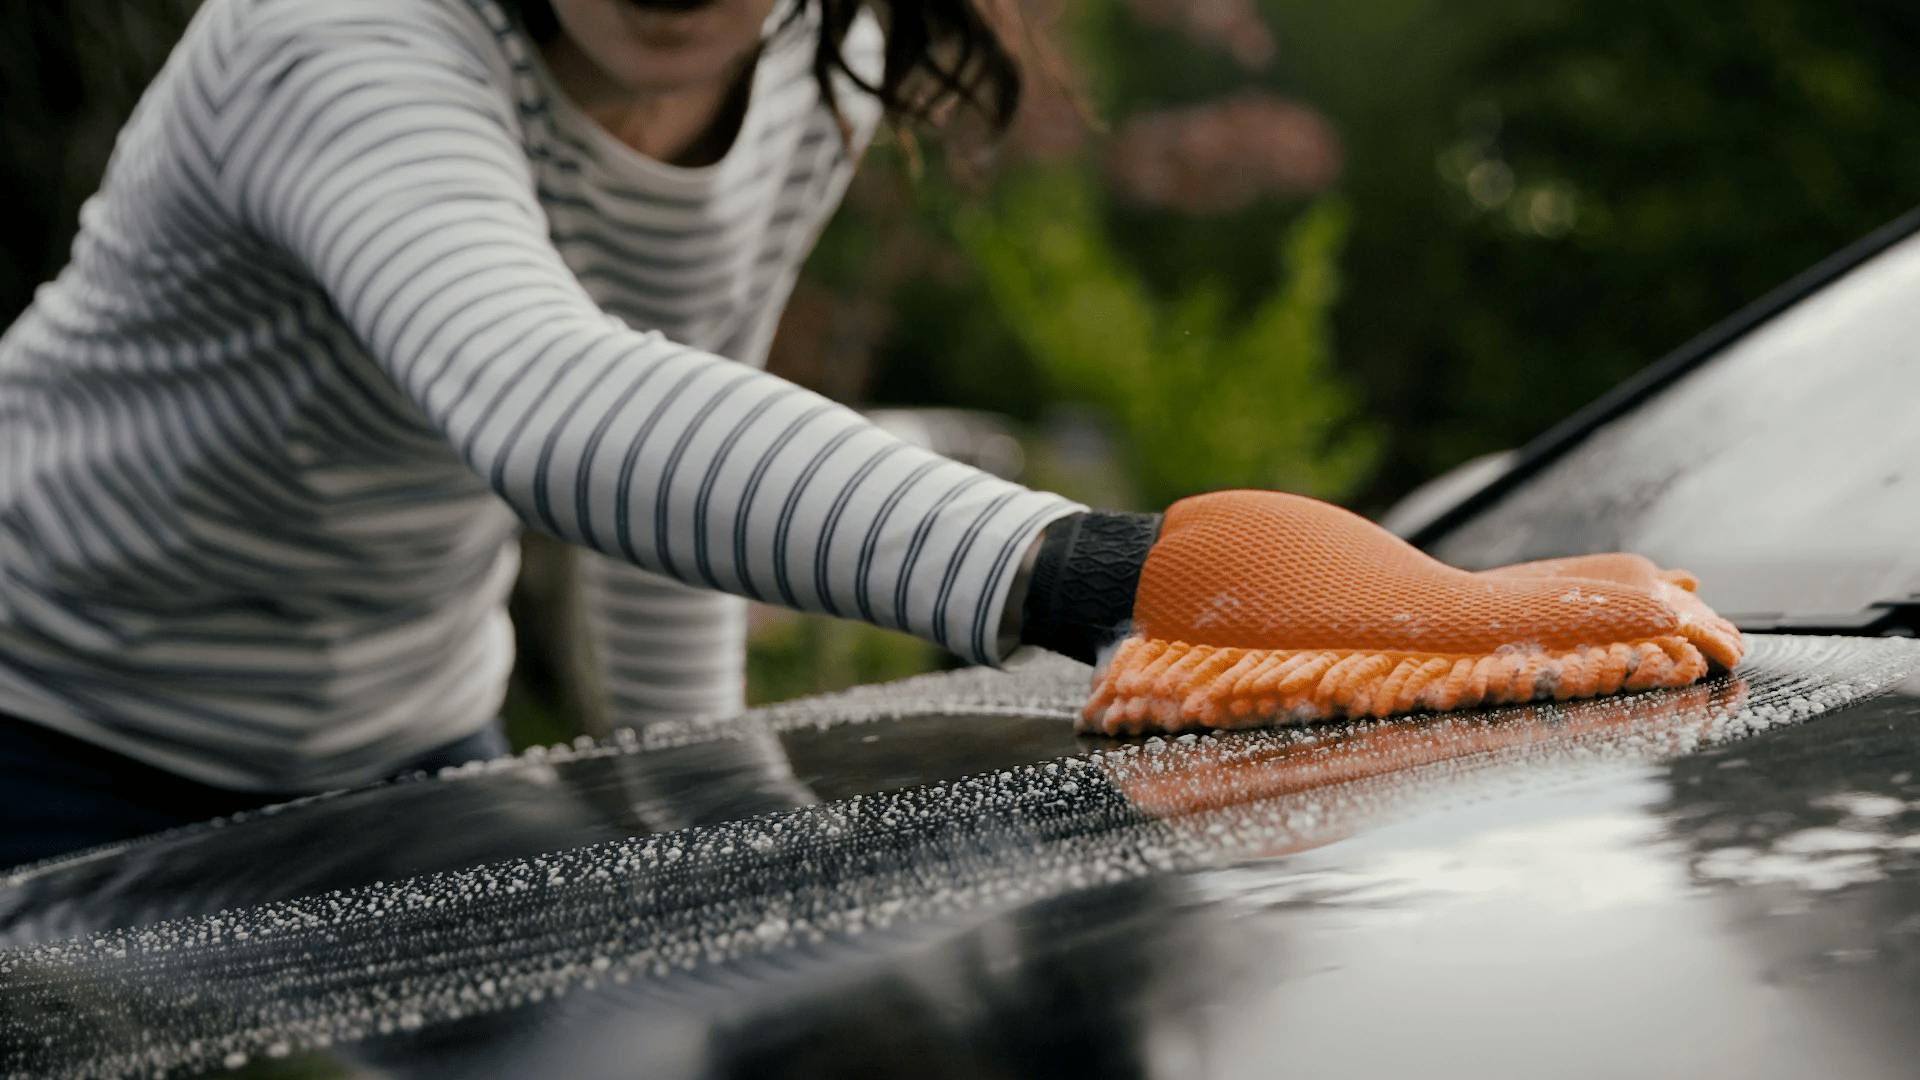 Car Washing at Home - advice and tips